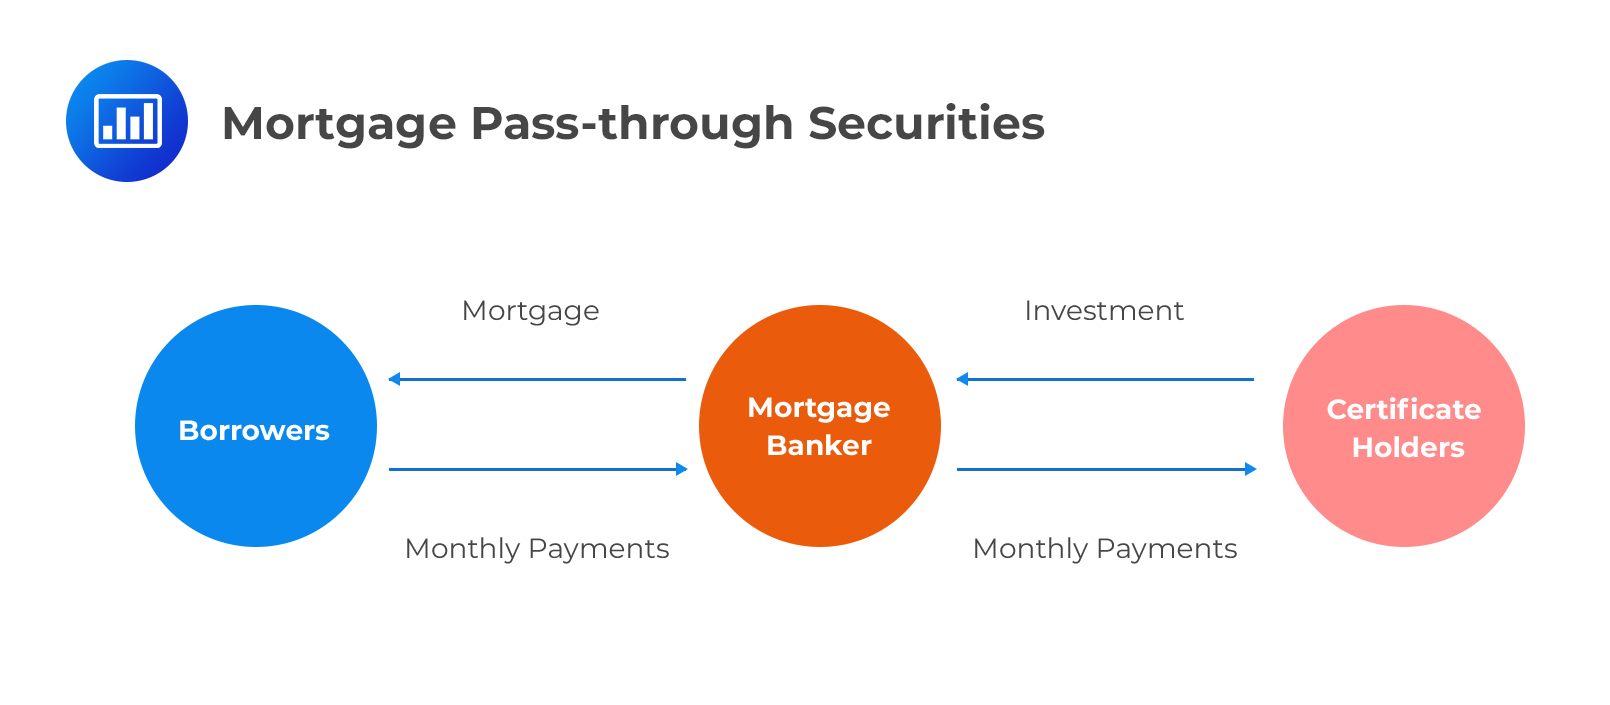 Mortgage Pass-through Securities